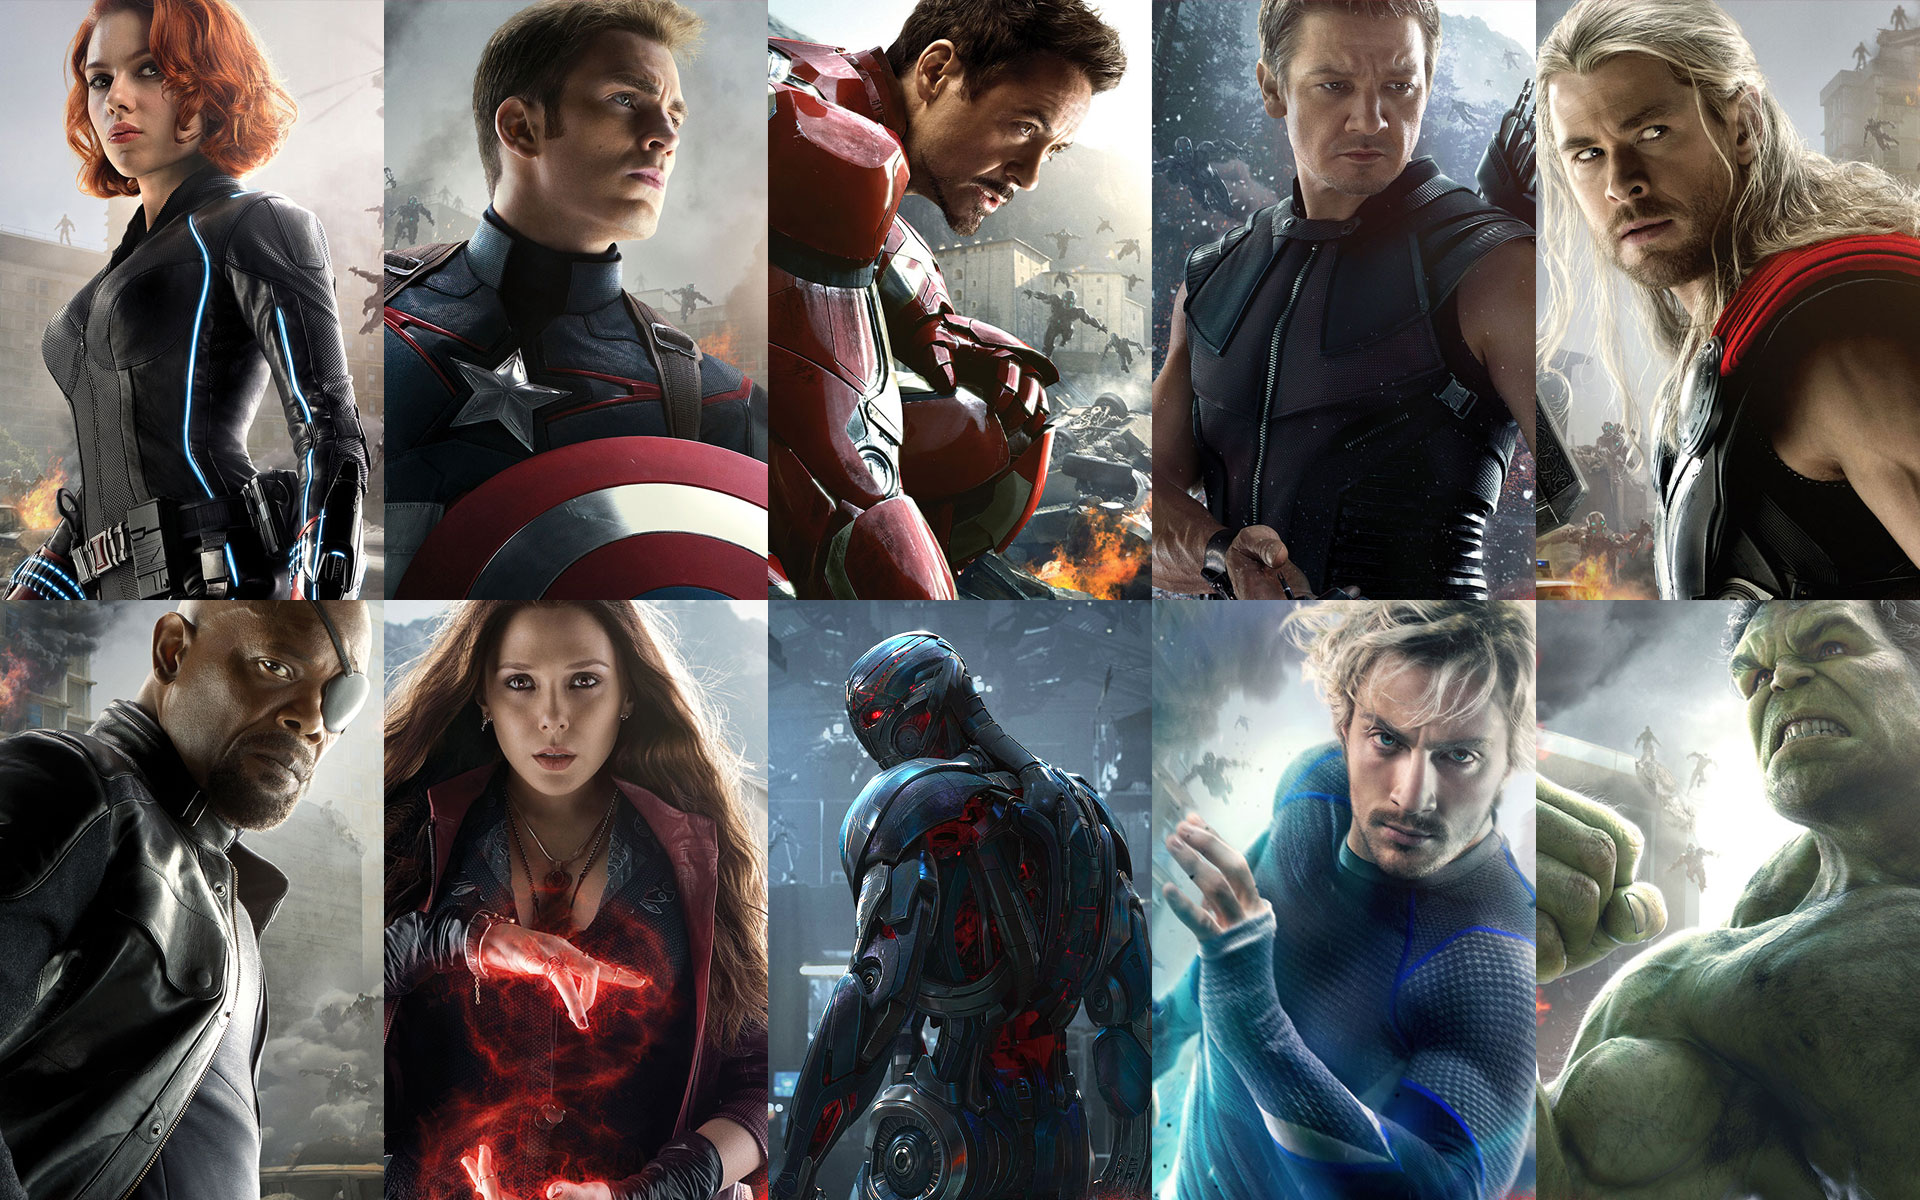 Avengers Age Of Ultron Desktop iPhone Wallpaper HD